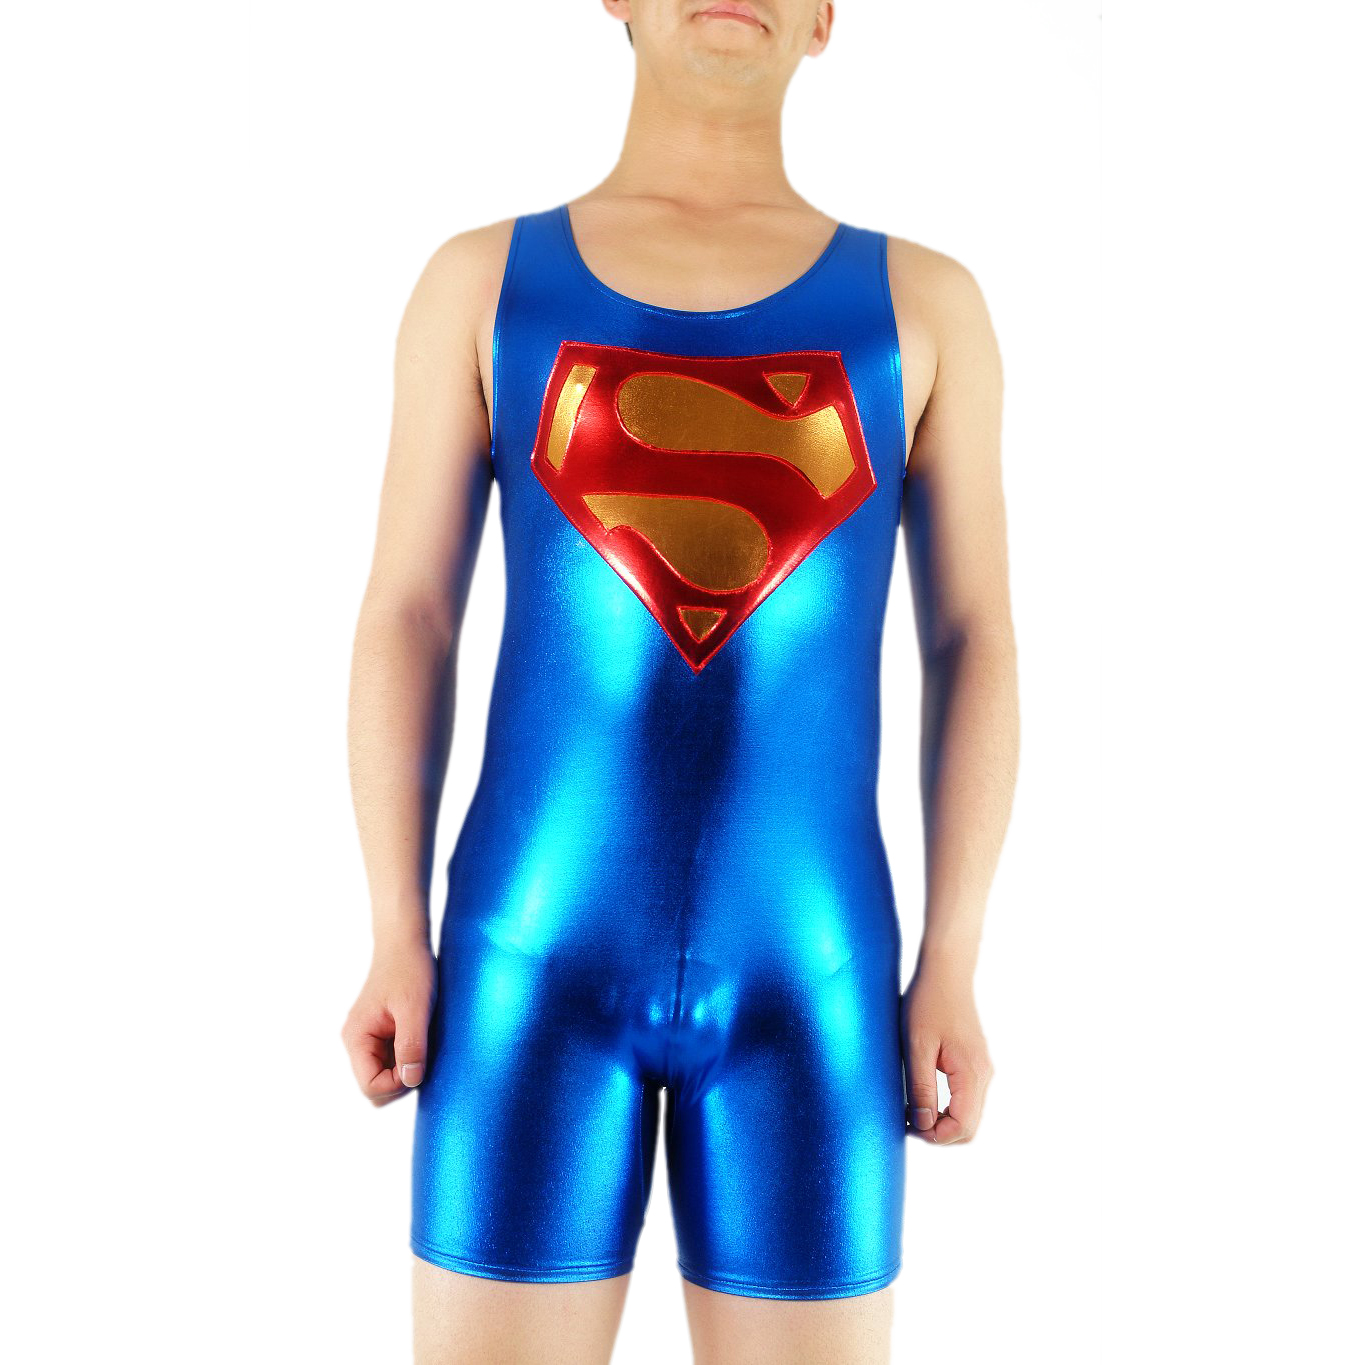 Men's Superhero Blue with Red Shiny Metallic Sleeveless Catsuit